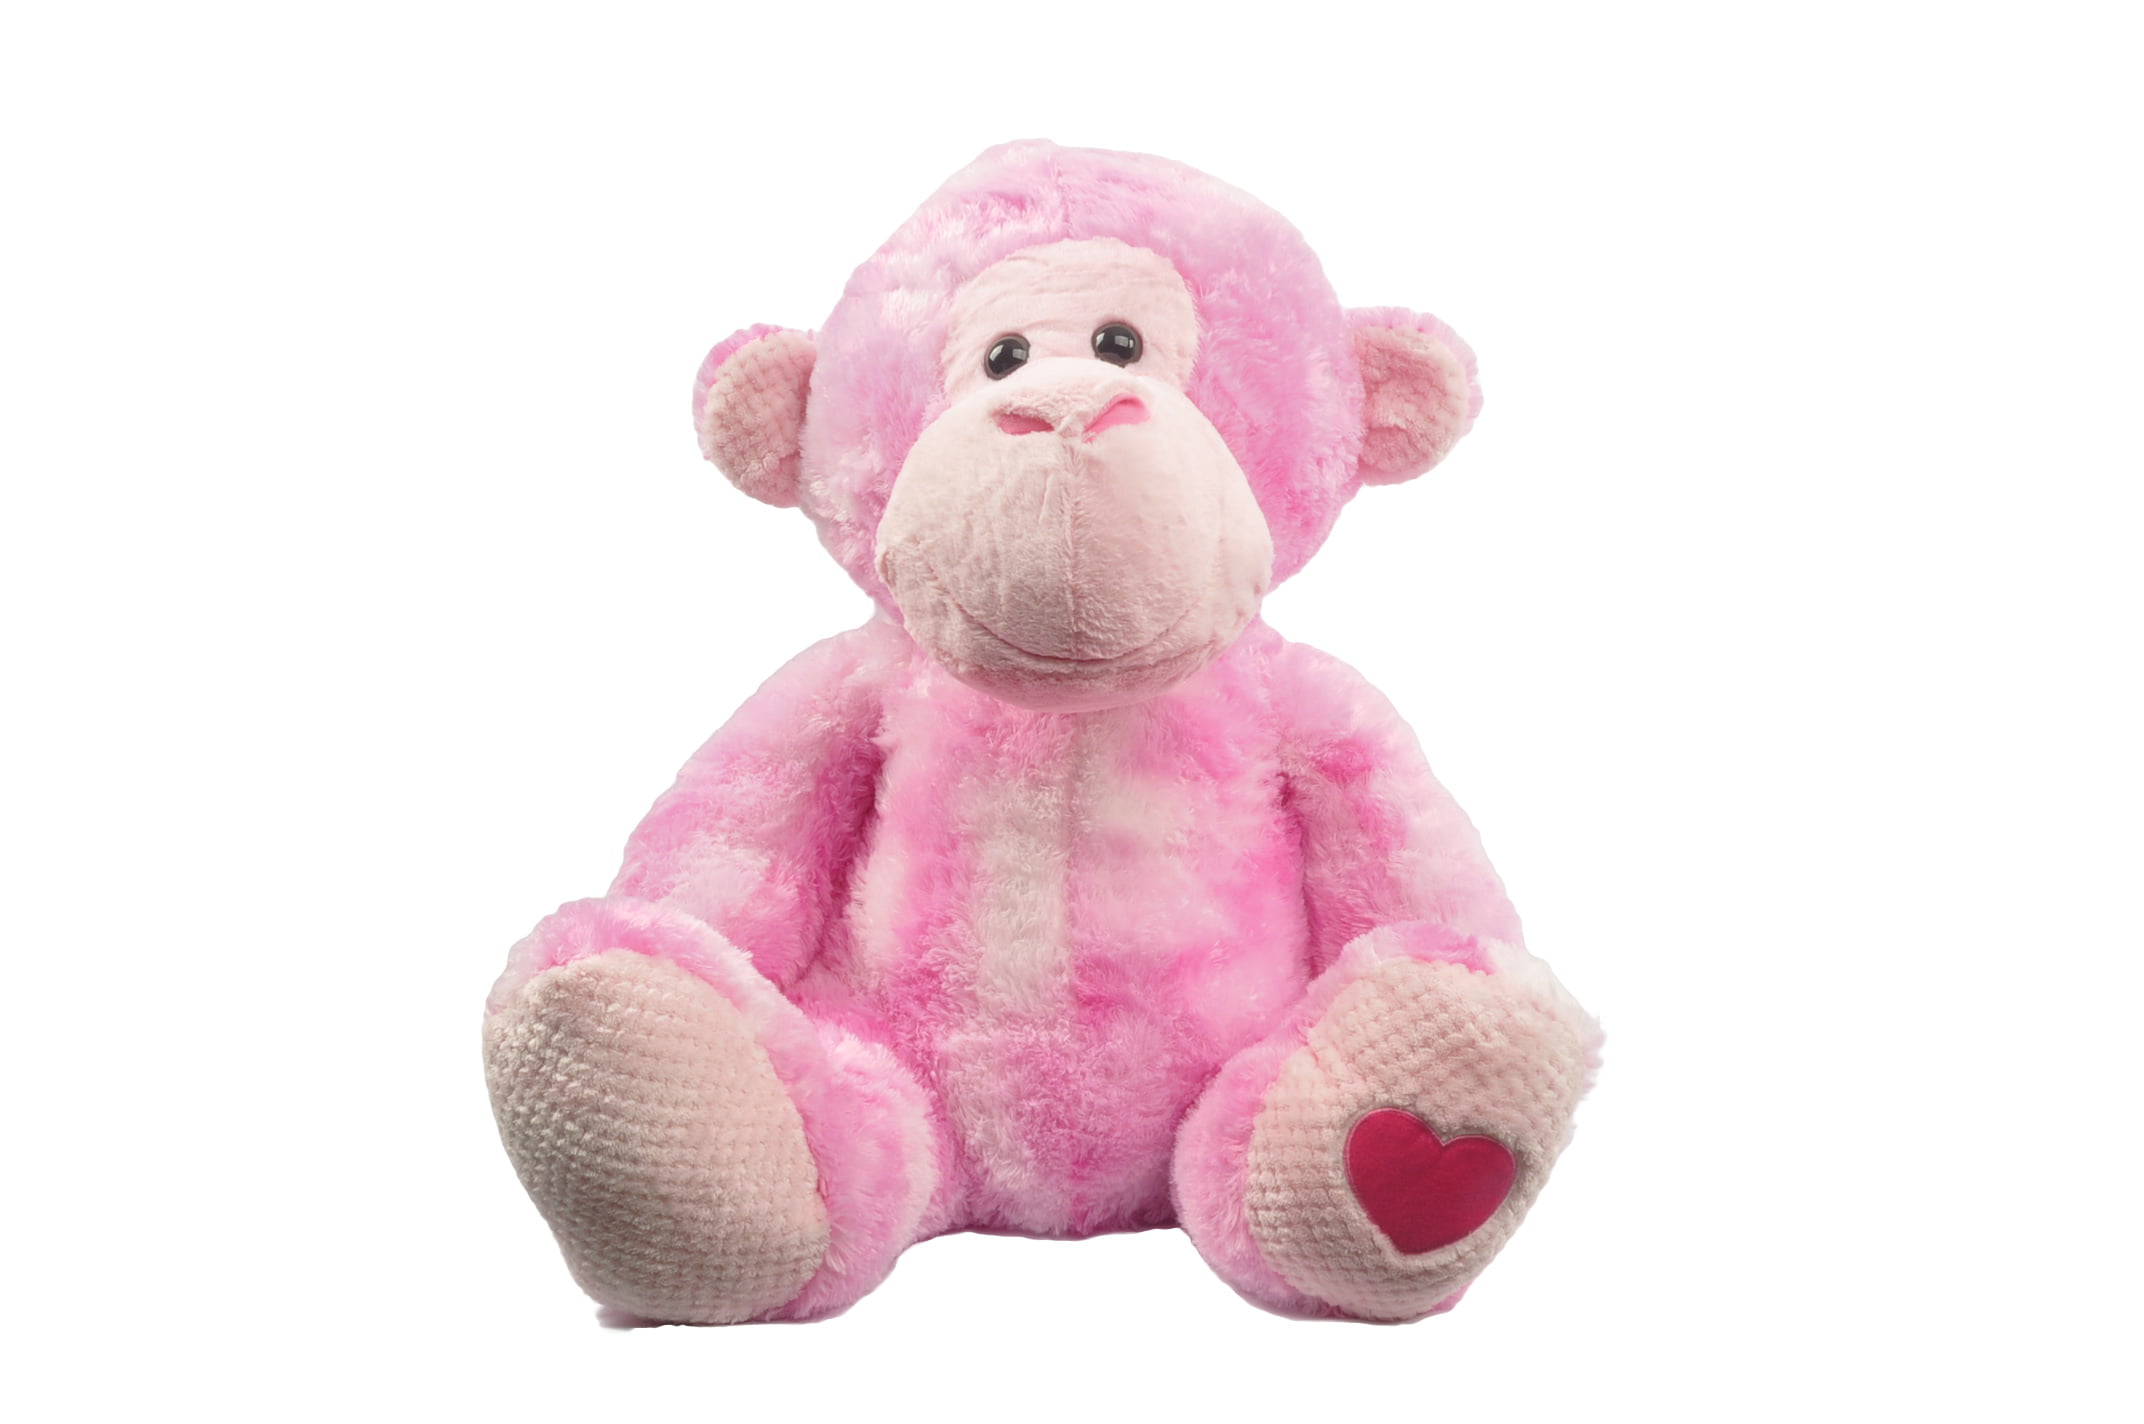 pink monkey stuffed animal